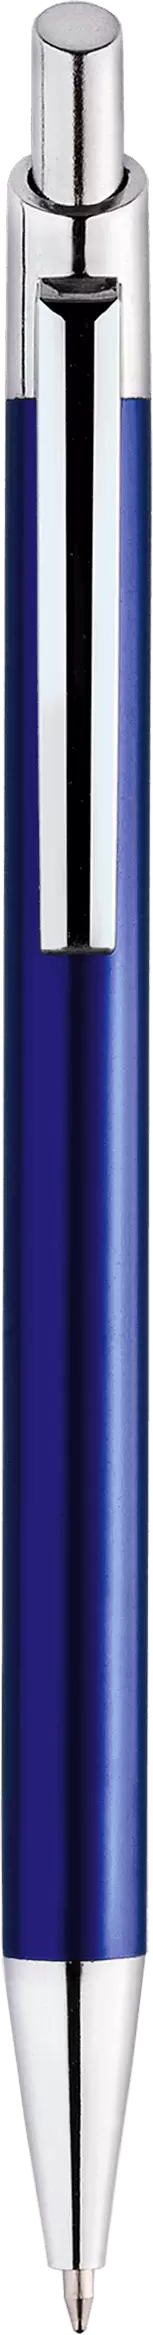 Ручка TIKKO Темно-синяя 2105-14